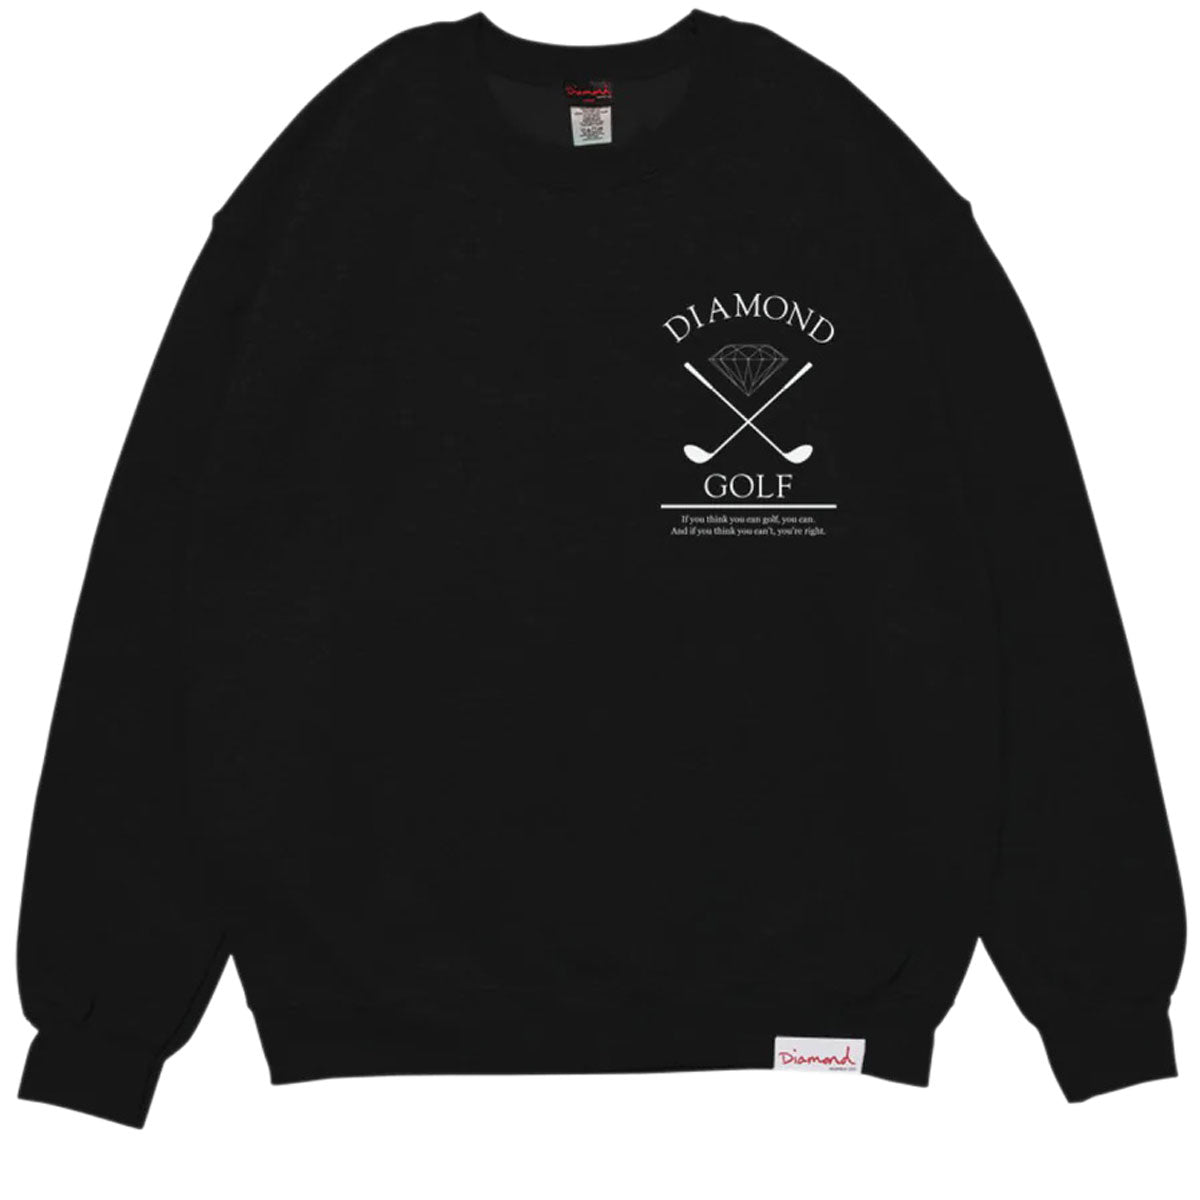 Diamond Supply Co. Golf Crewneck Sweatshirt - Black image 1